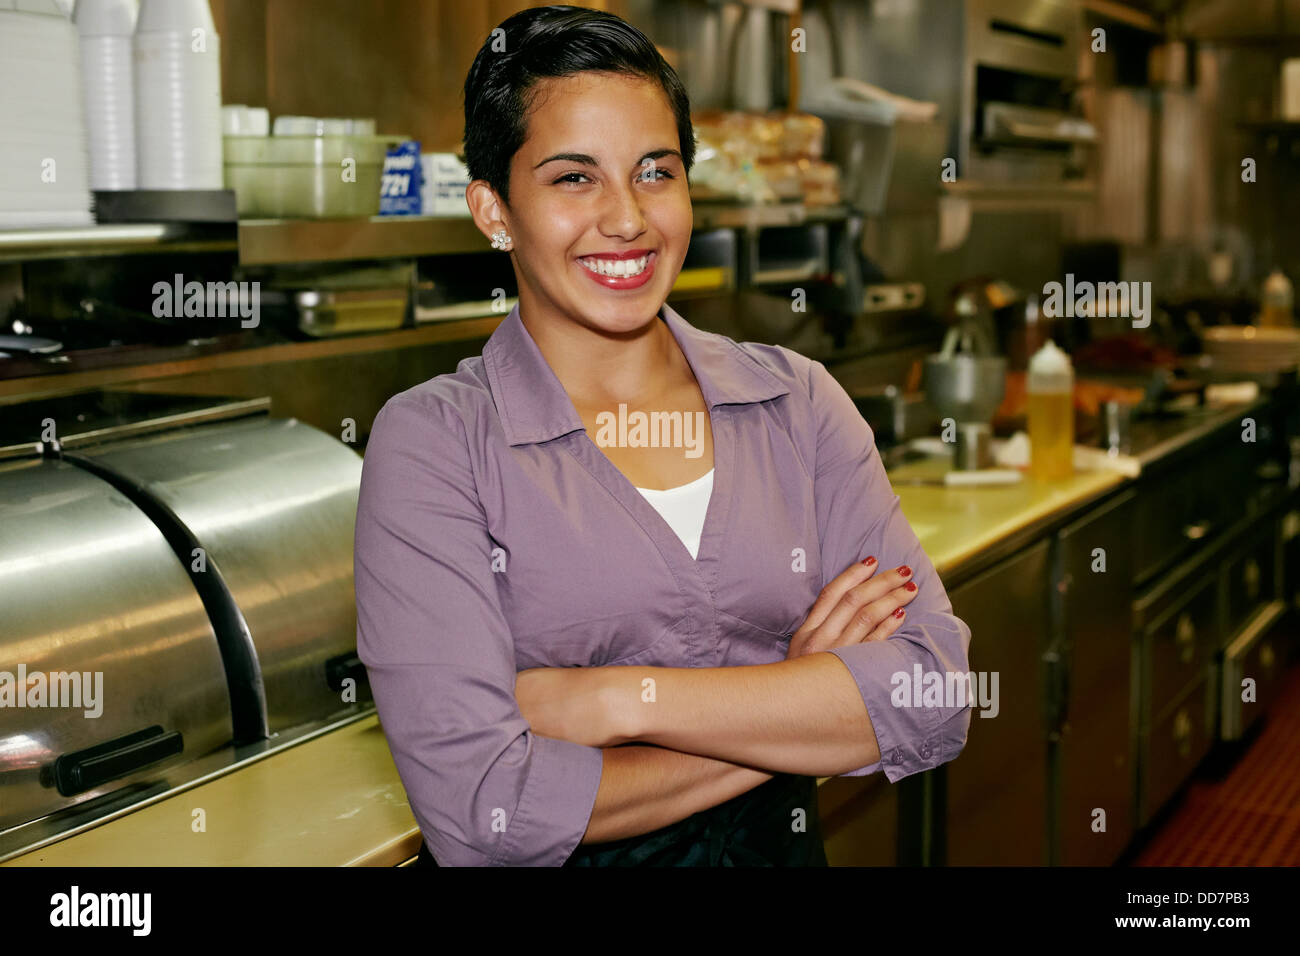 Hispanic waitress smiling in restaurant Banque D'Images